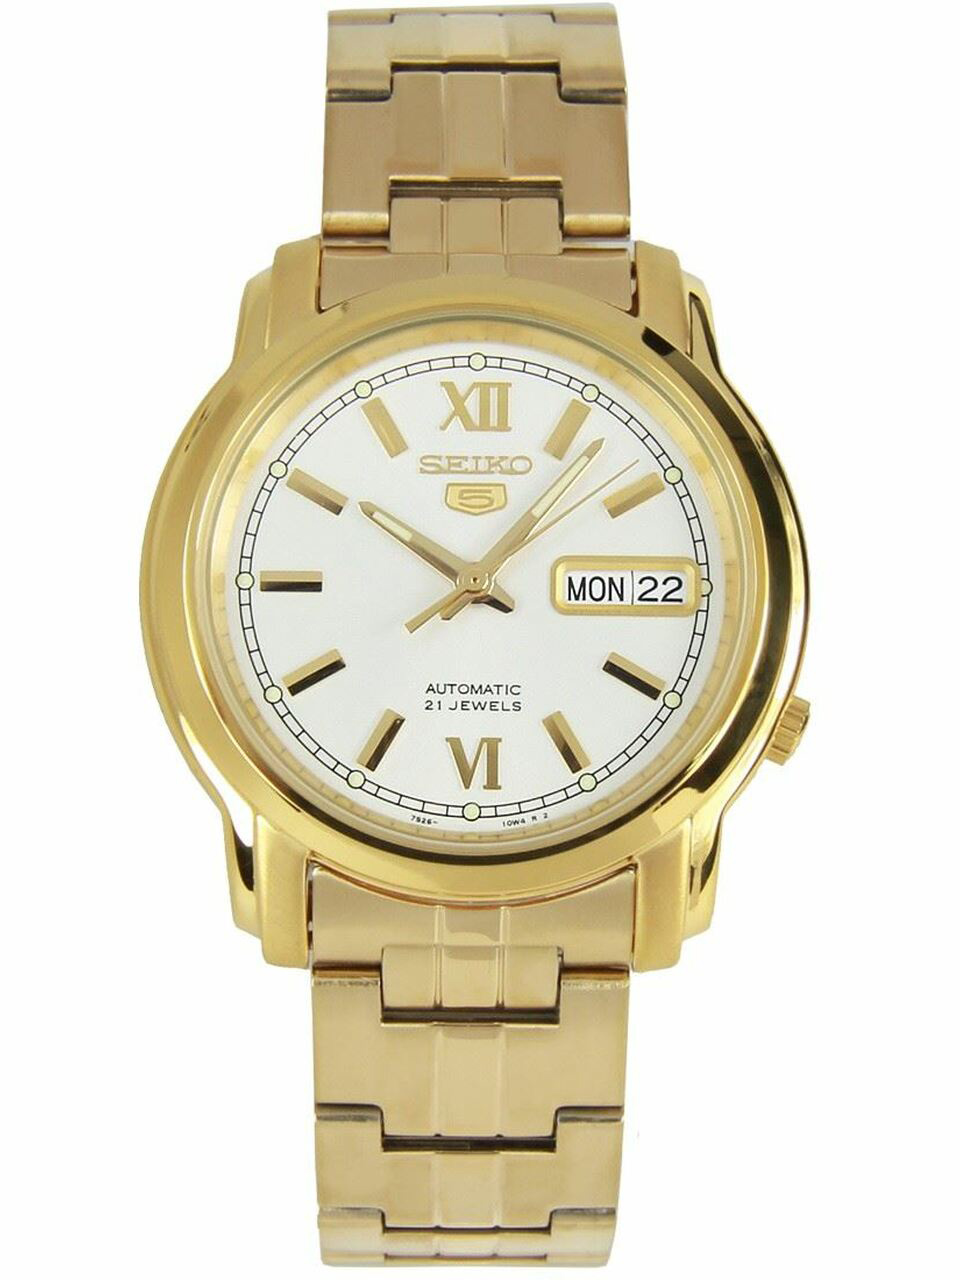 Đồng hồ Seiko 5 Automatic 21 Jewels gold SNKK84K1 - Smile Watch